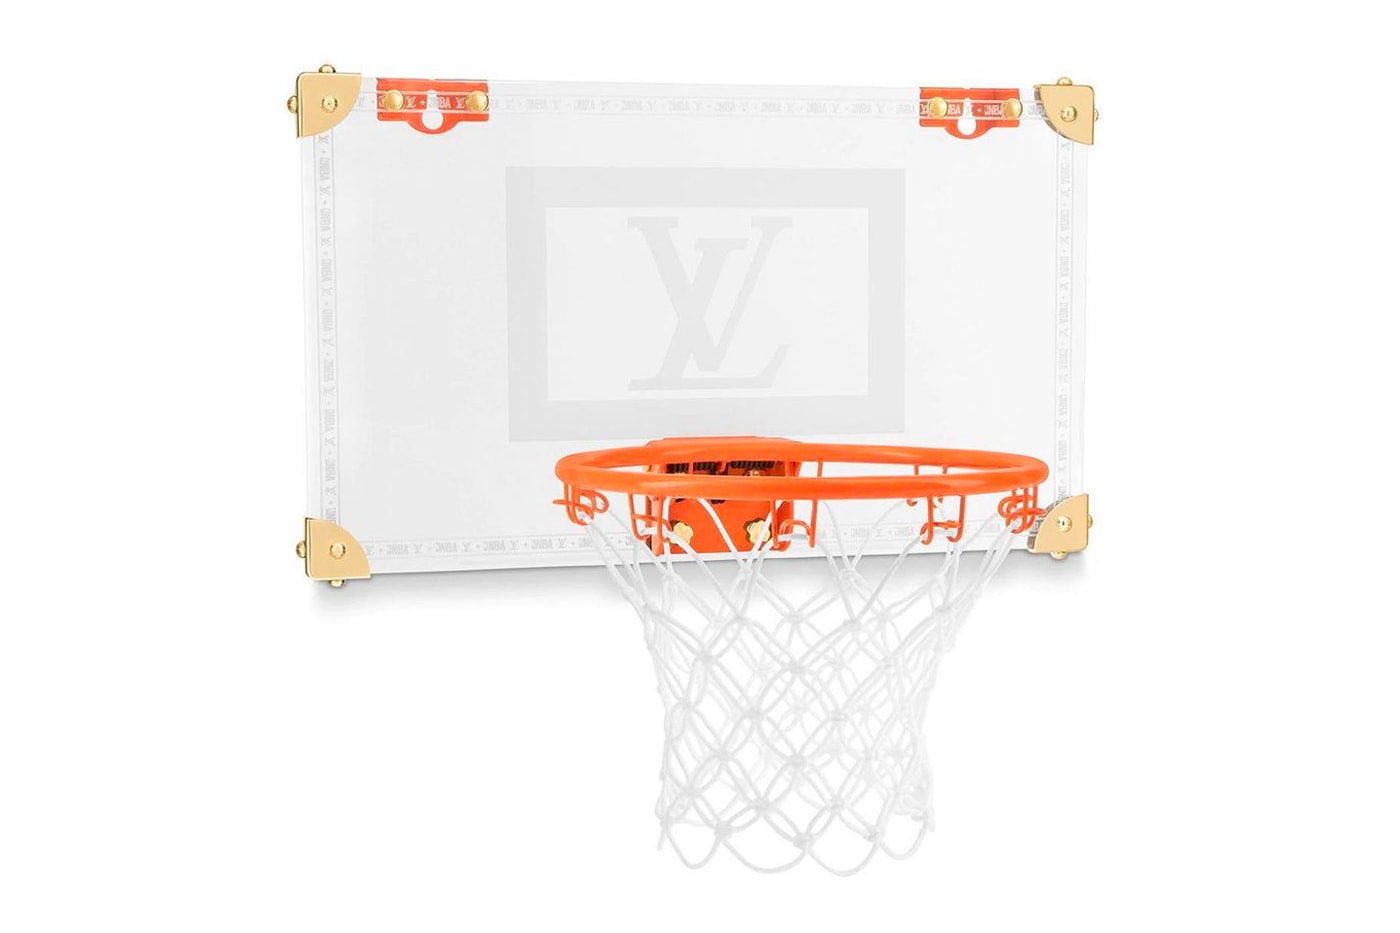 NBA x Louis Vuitton Backboard and Ball Release